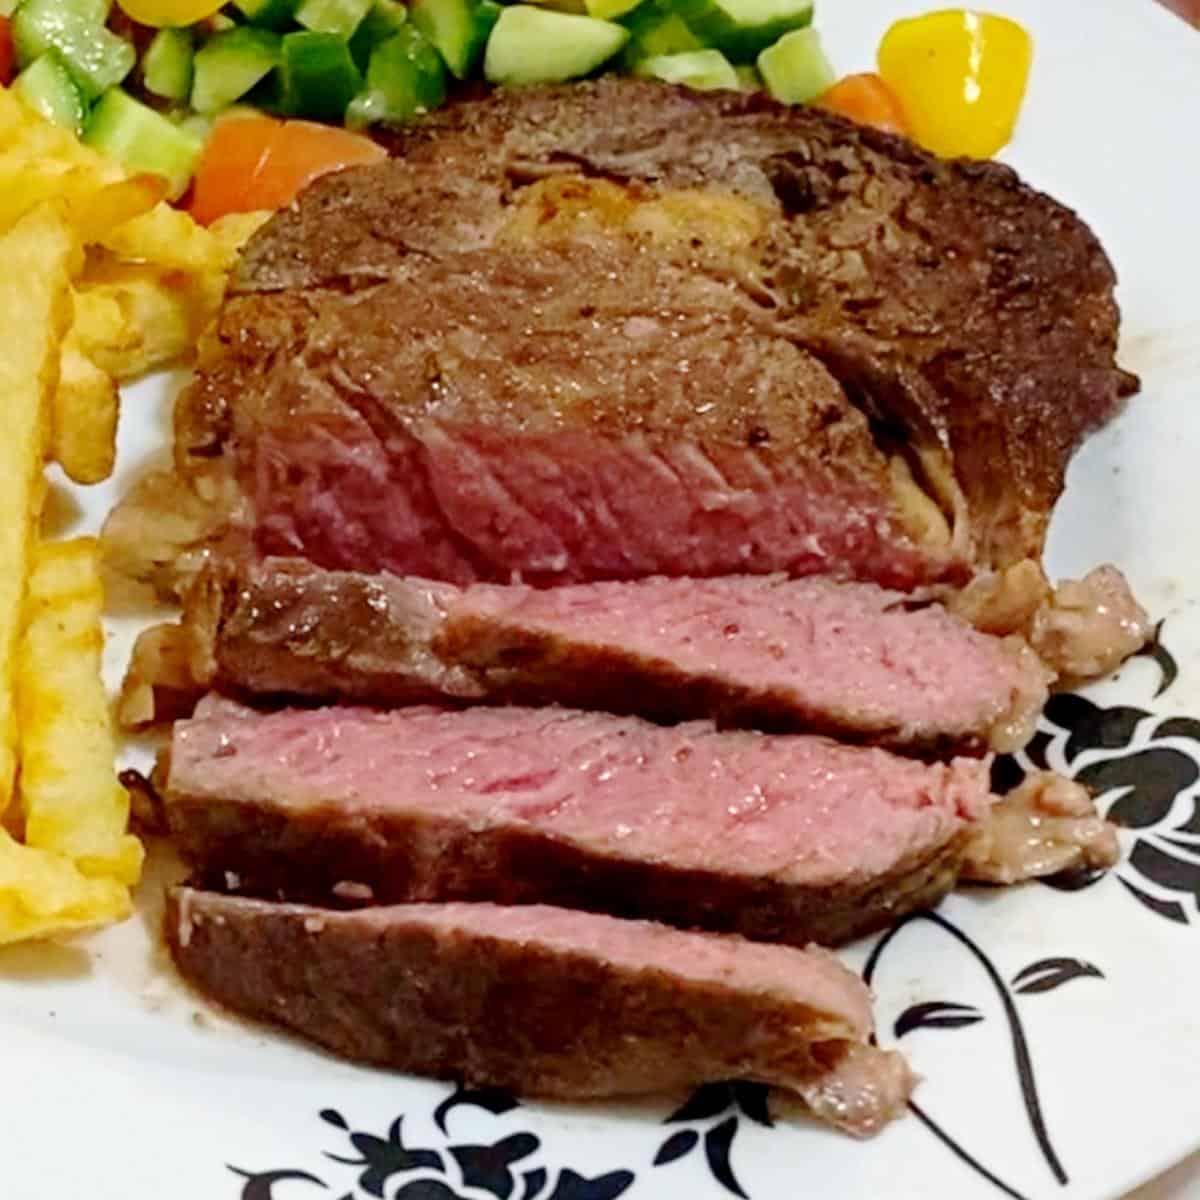 How to cook a medium-rare steak